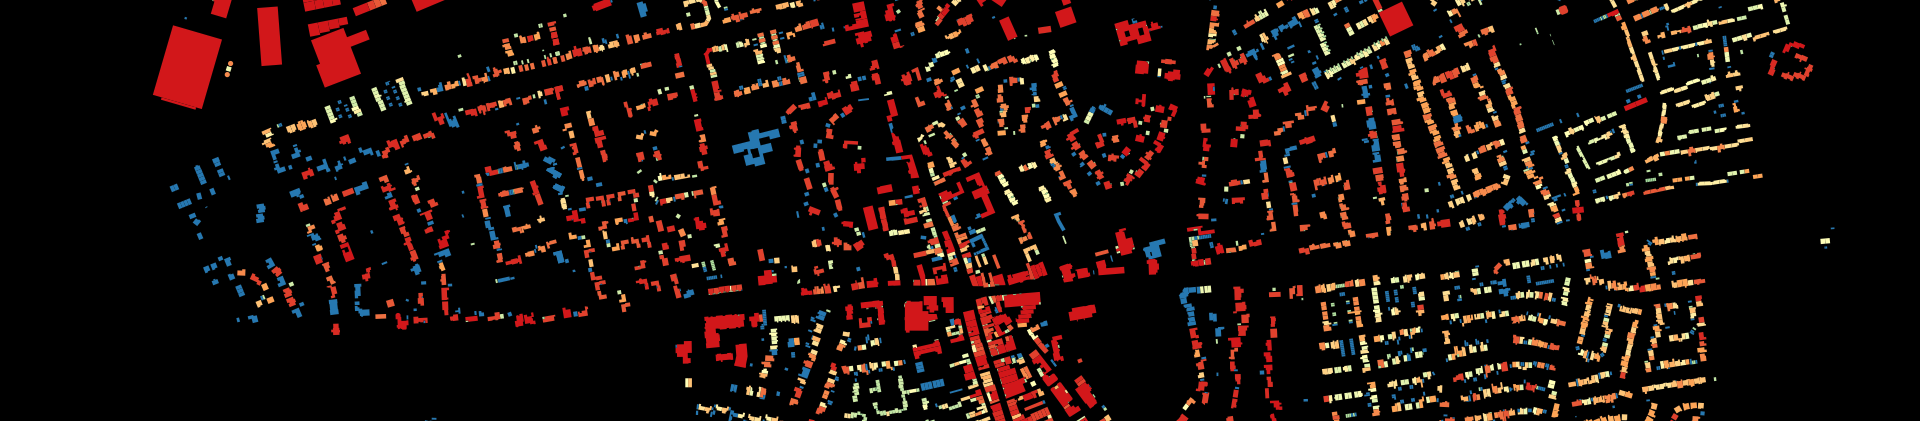 MScUD 2009-10: Block analysis and Local Urban Code (LUC).